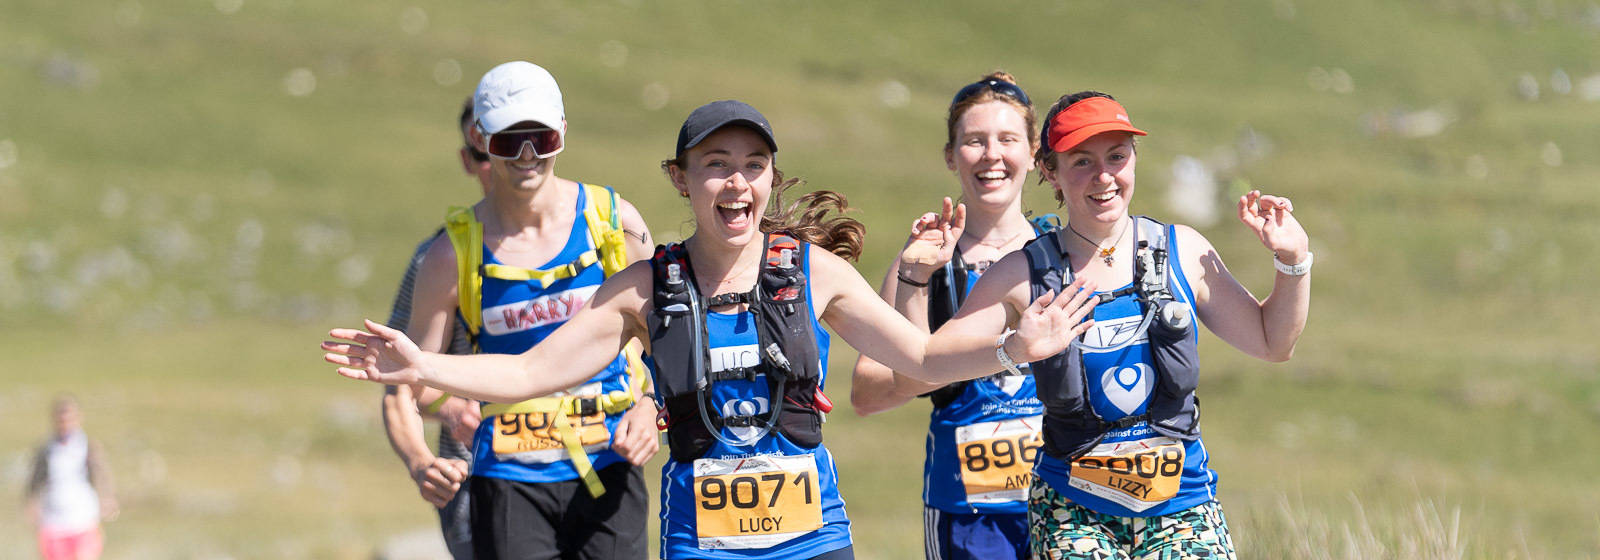 Snowdonia Trail Marathon Eryri Group